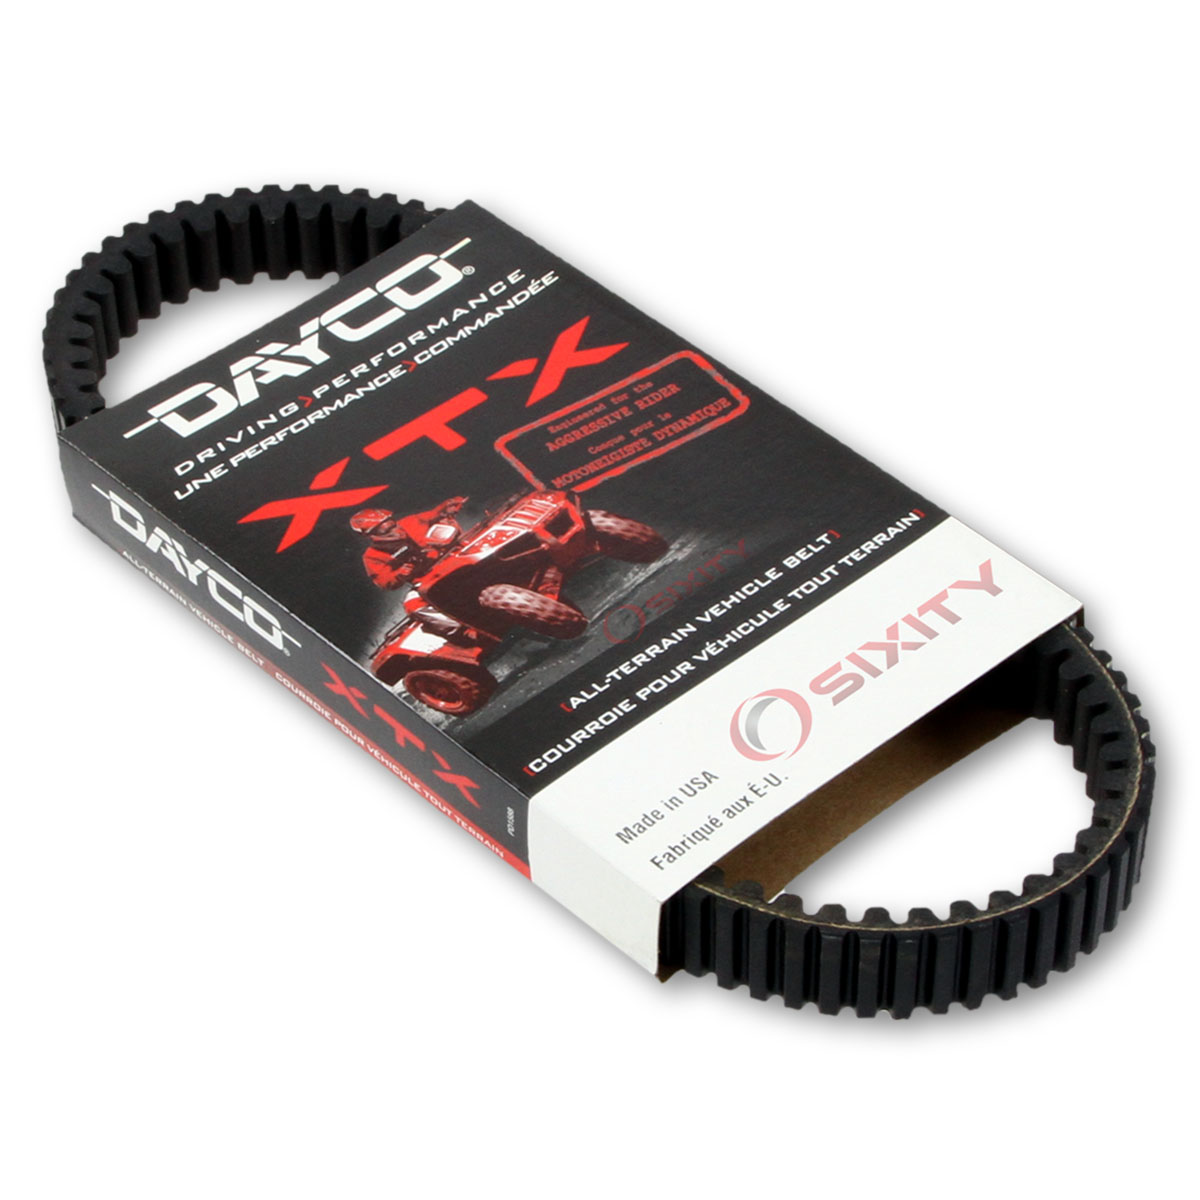 Dayco XTX Drive Belt for 2012 Arctic Cat 550i GT - Extreme Torque CVT